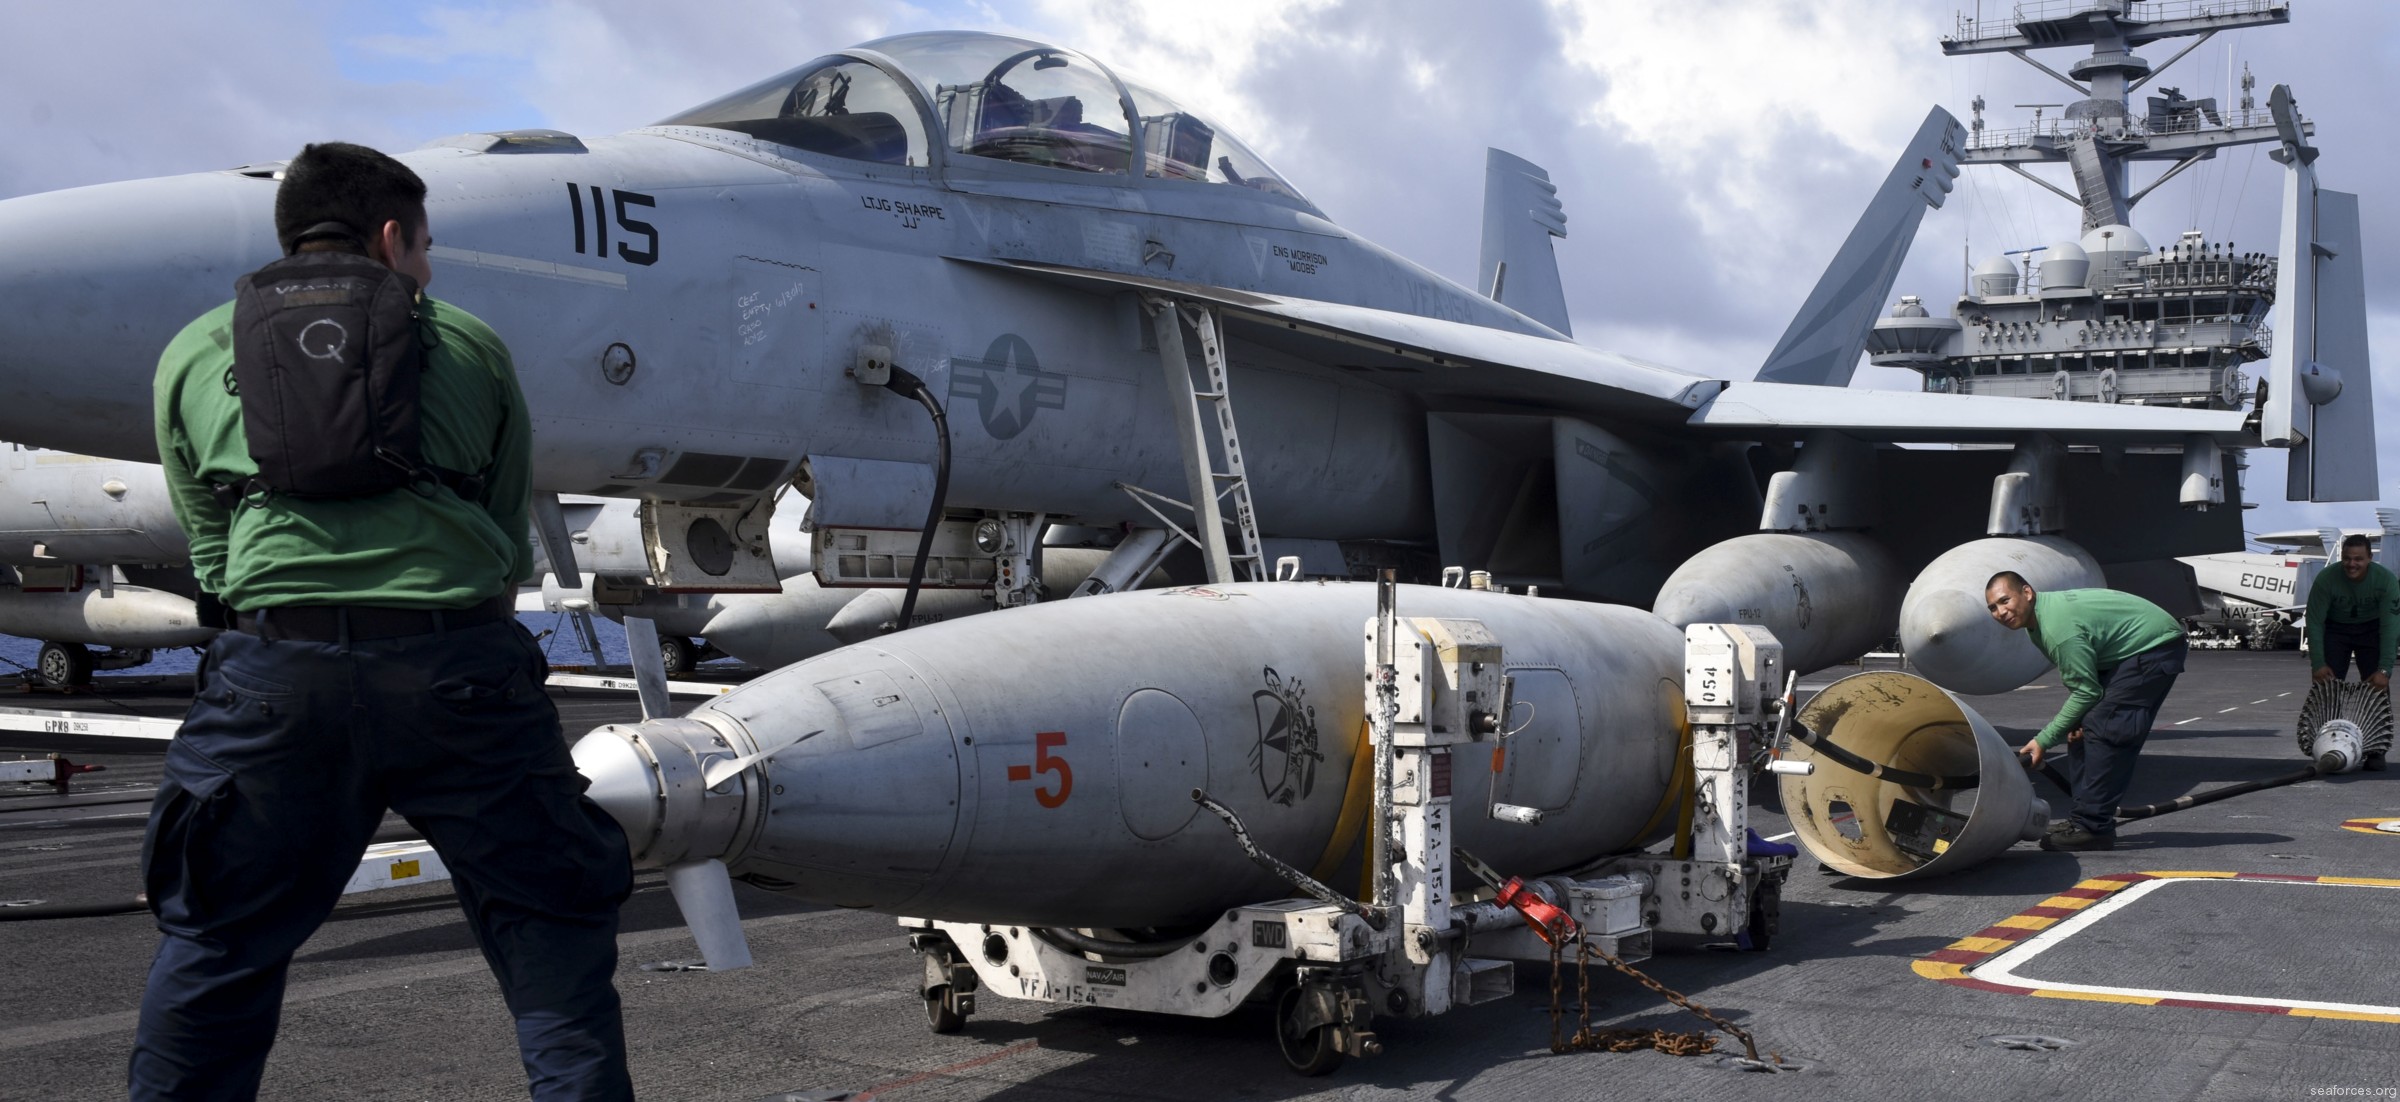 vfa-154 black knights strike fighter squadron navy f/a-18f super hornet carrier air wing cvw-11 uss nimitz cvn-68 11